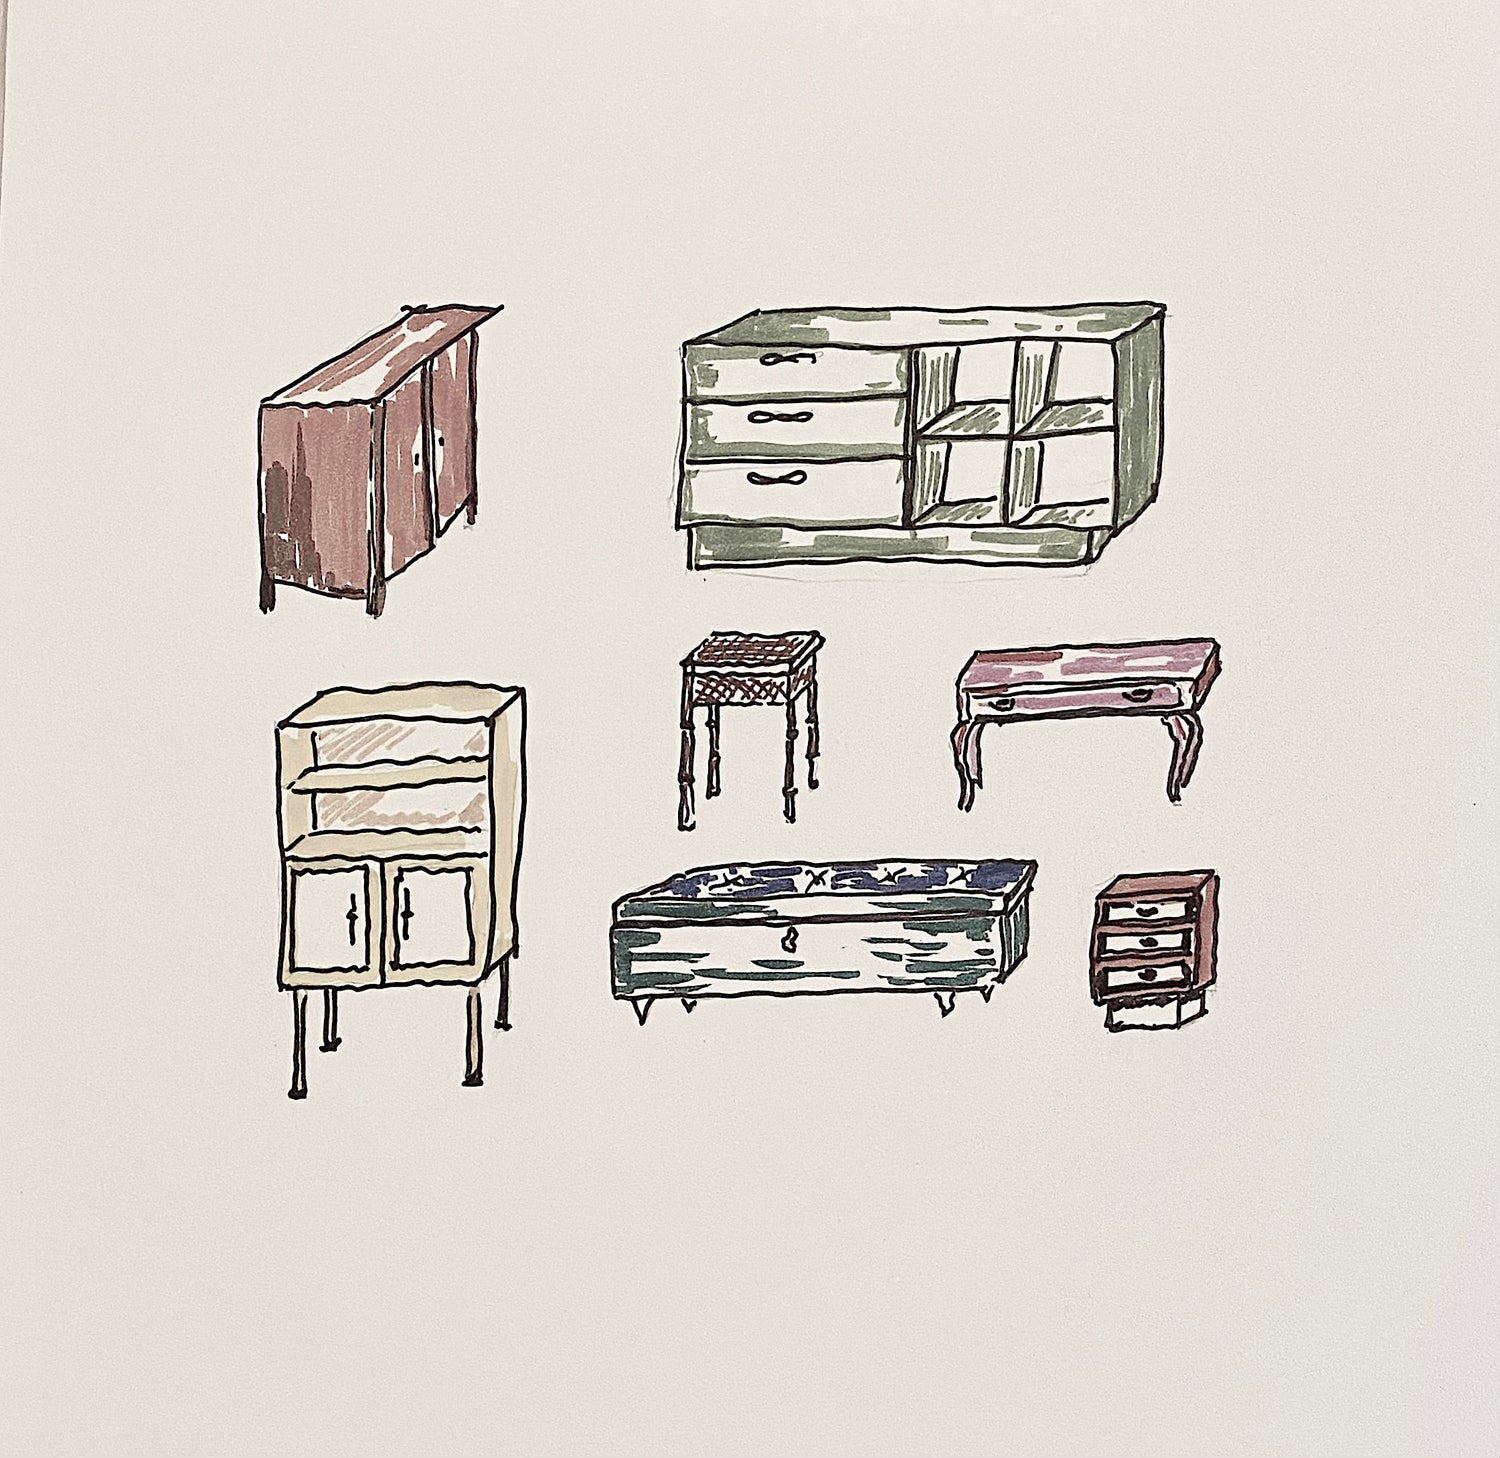 Cabinets/Dressers/Shelving